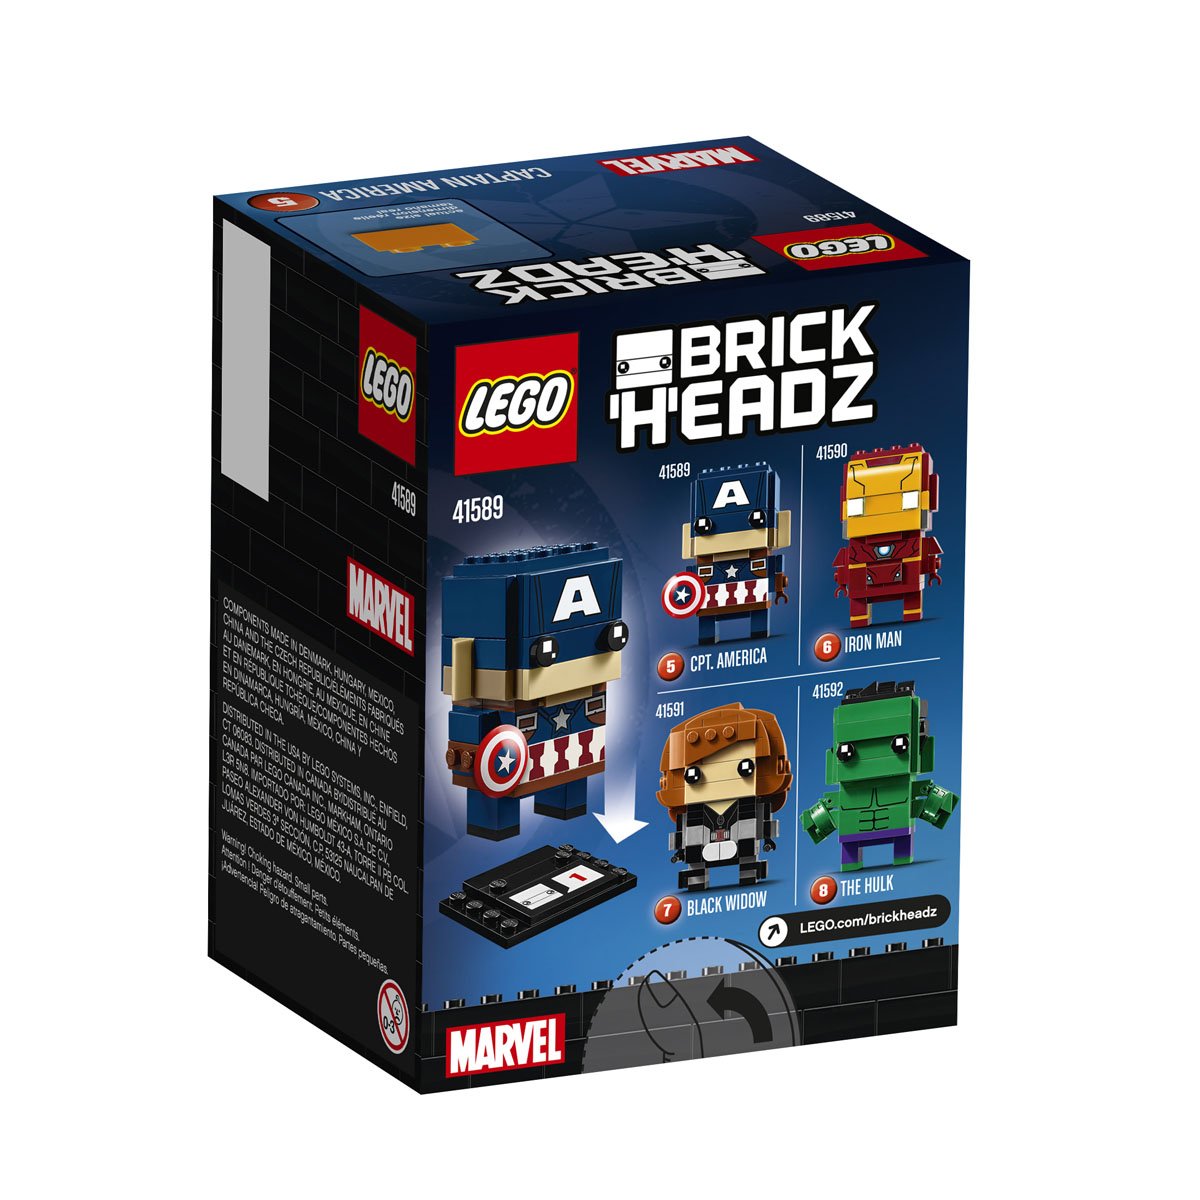 Brickheadz Captain America Lego